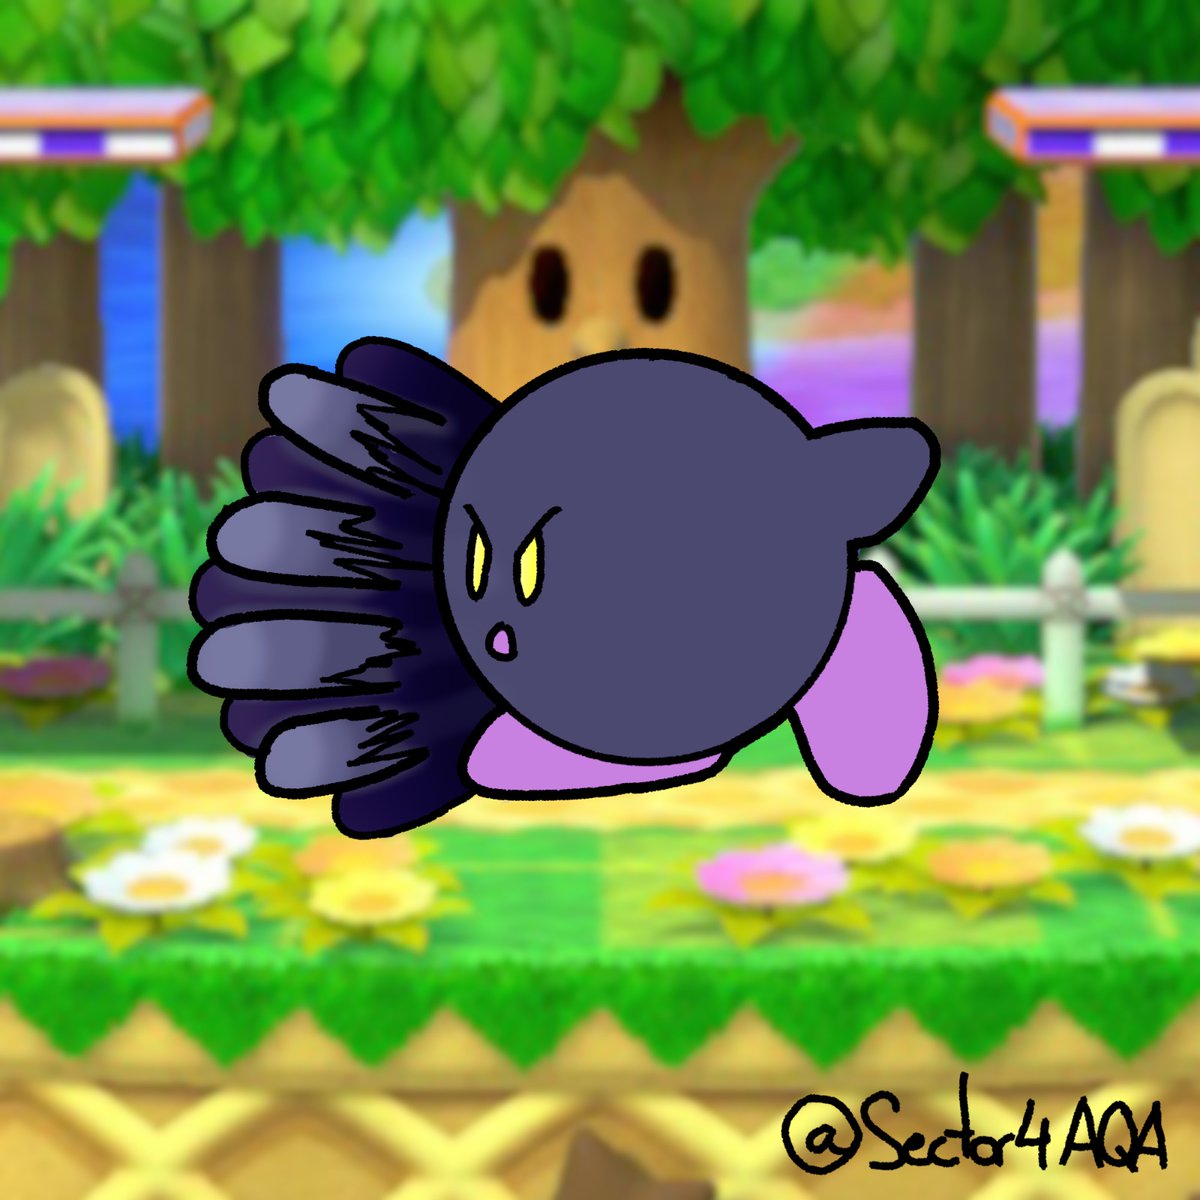 Kirby for Angiglash8
#SmashUltimate #kirbyfanart